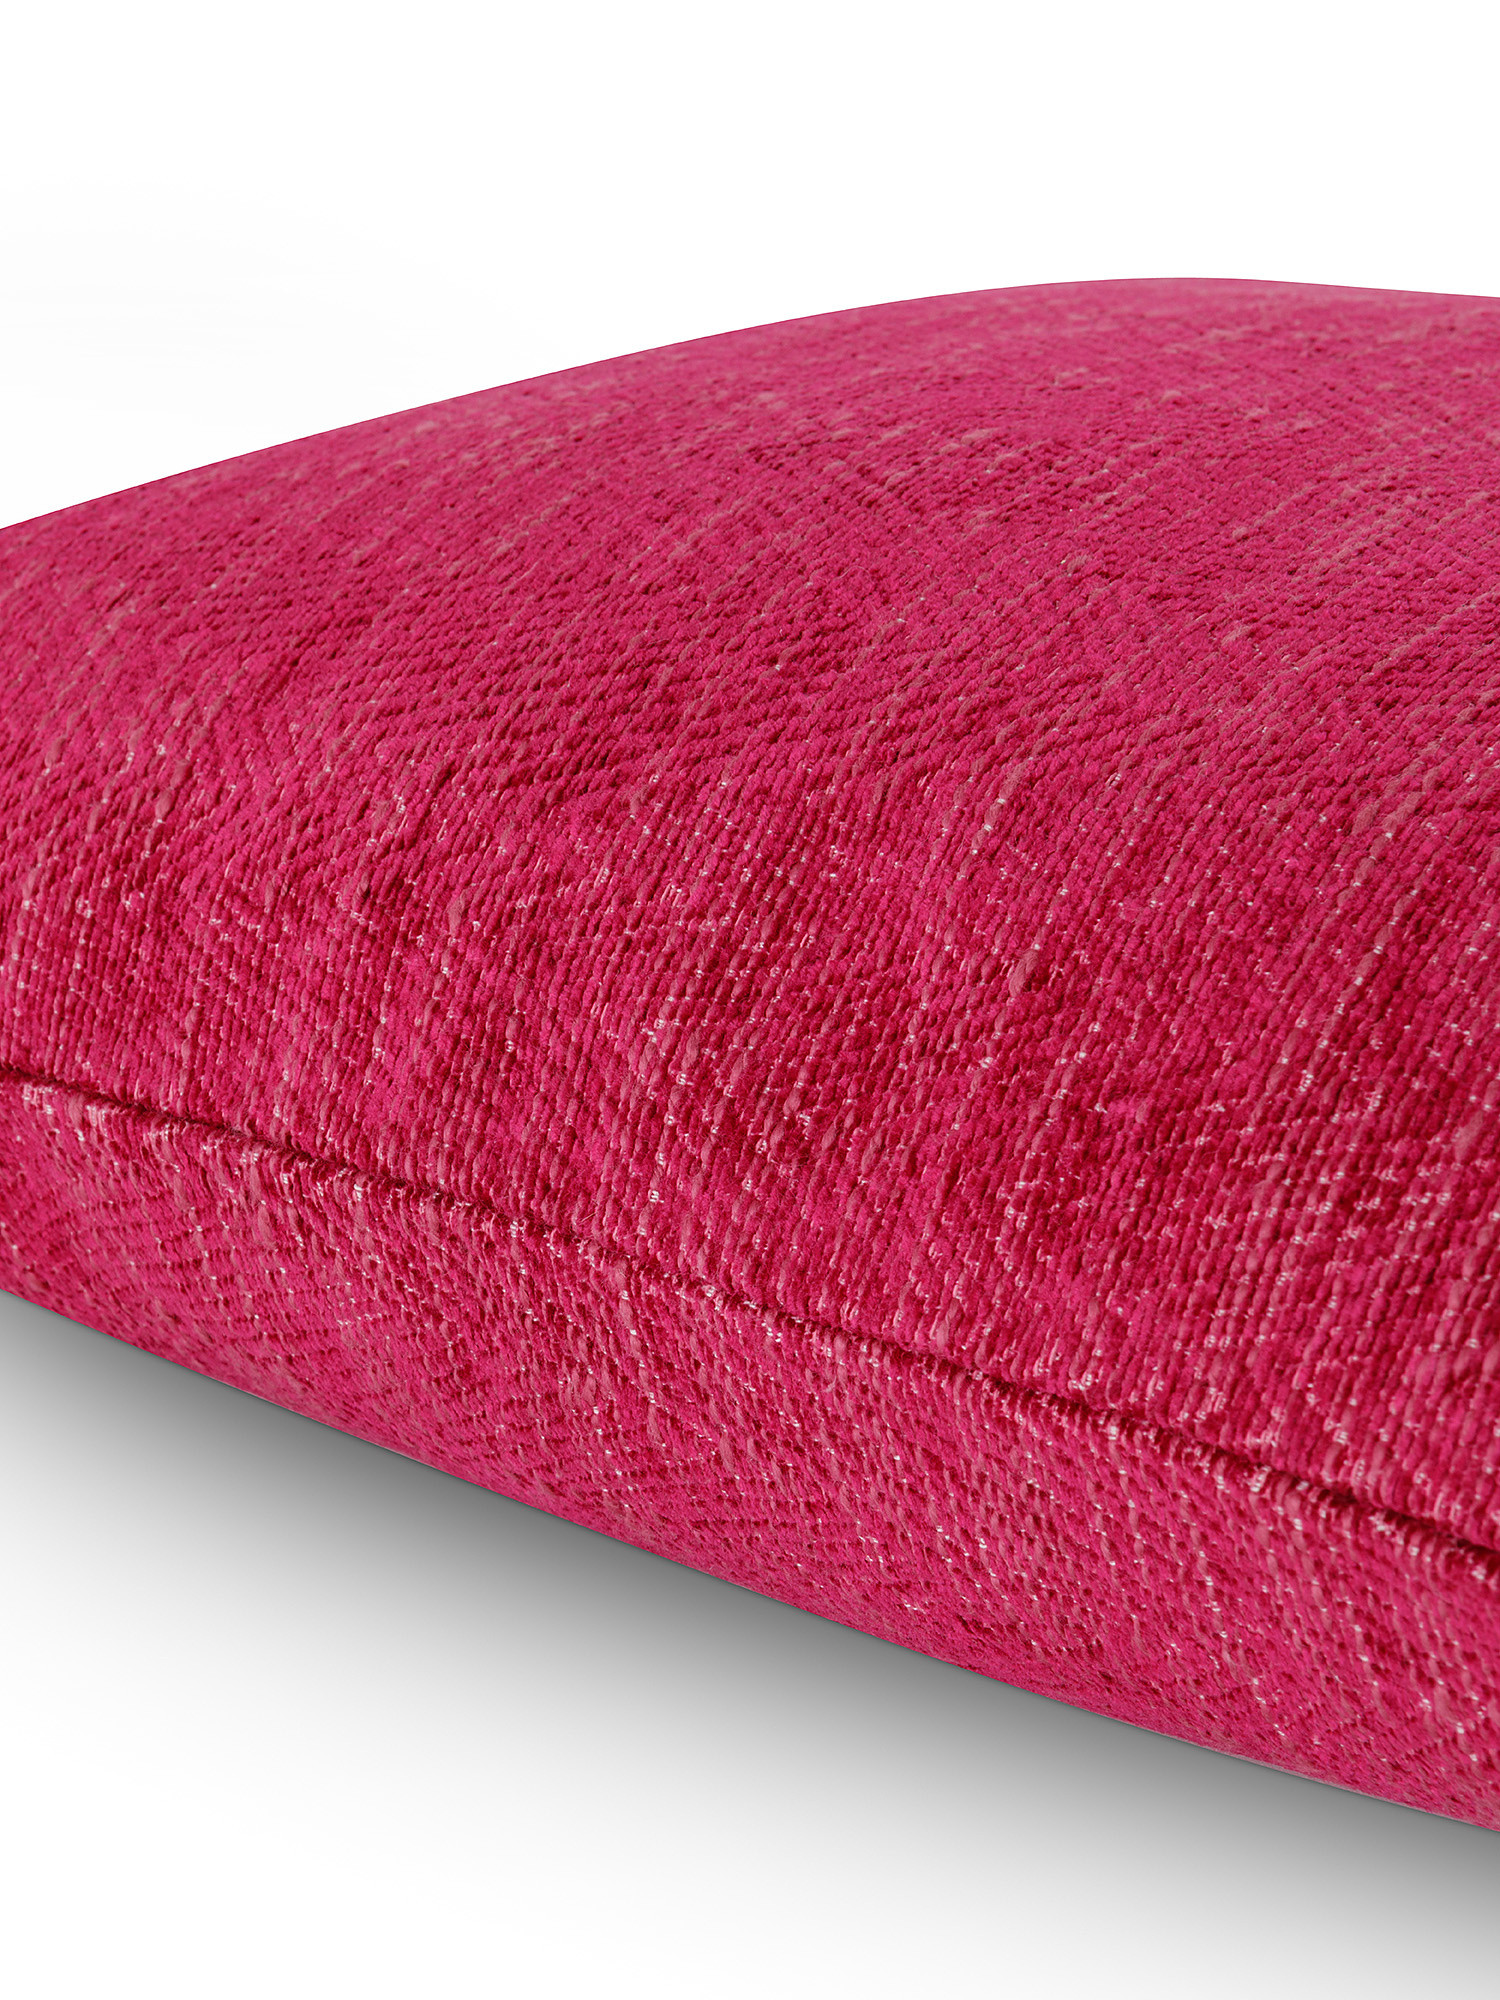 Jacquard cushion with zigzag motif 45x45cm, Pink Fuchsia, large image number 1